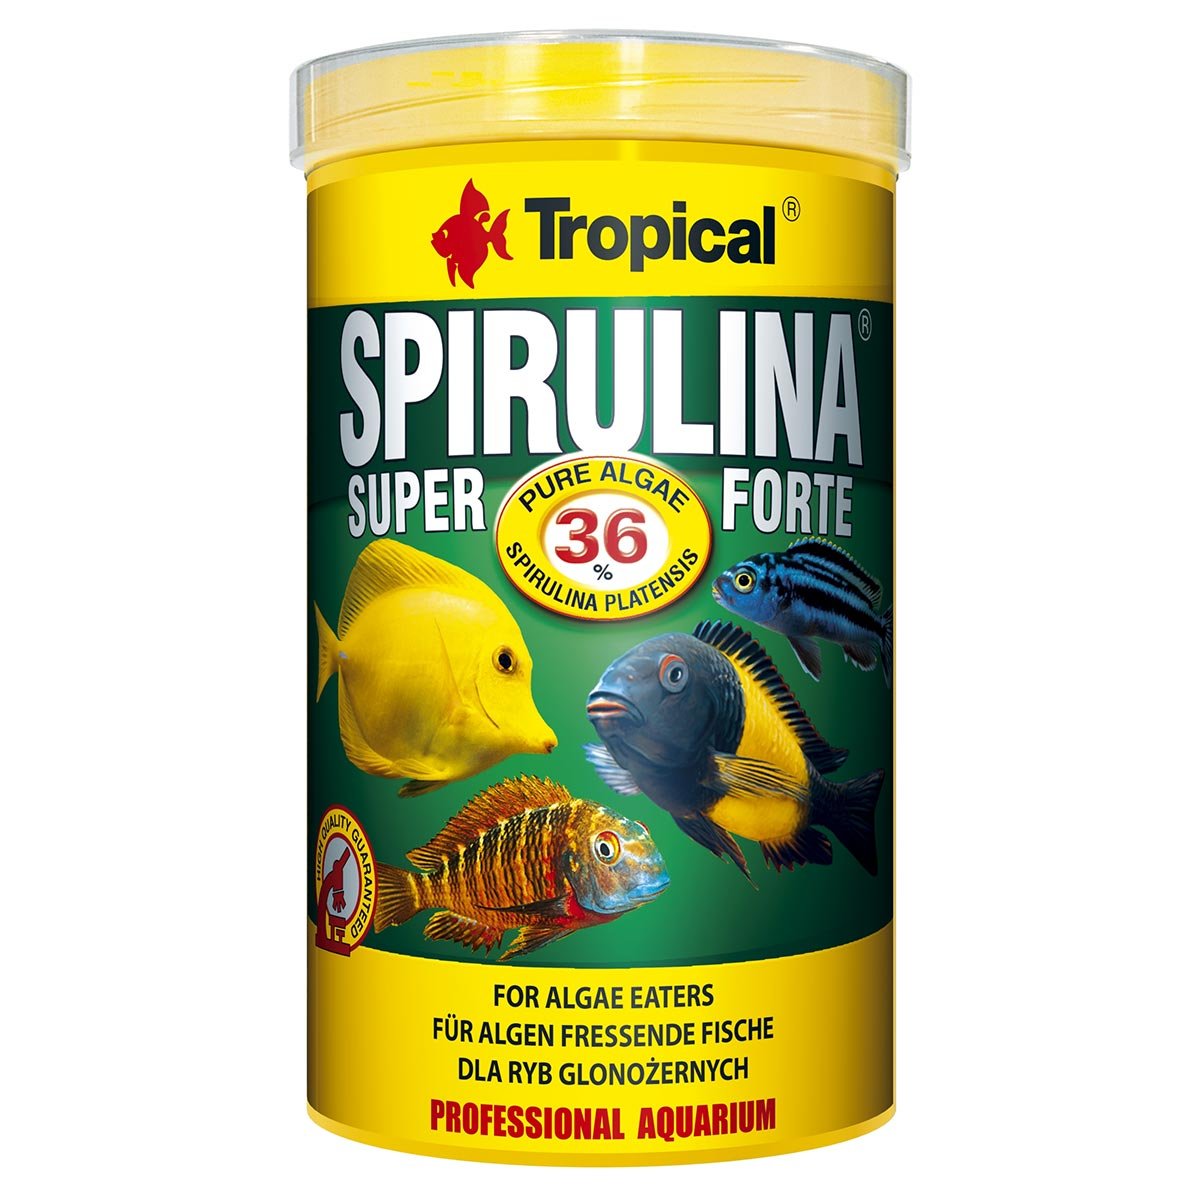 Tropical Super Spirulina Forte (36%) 1L von Tropical